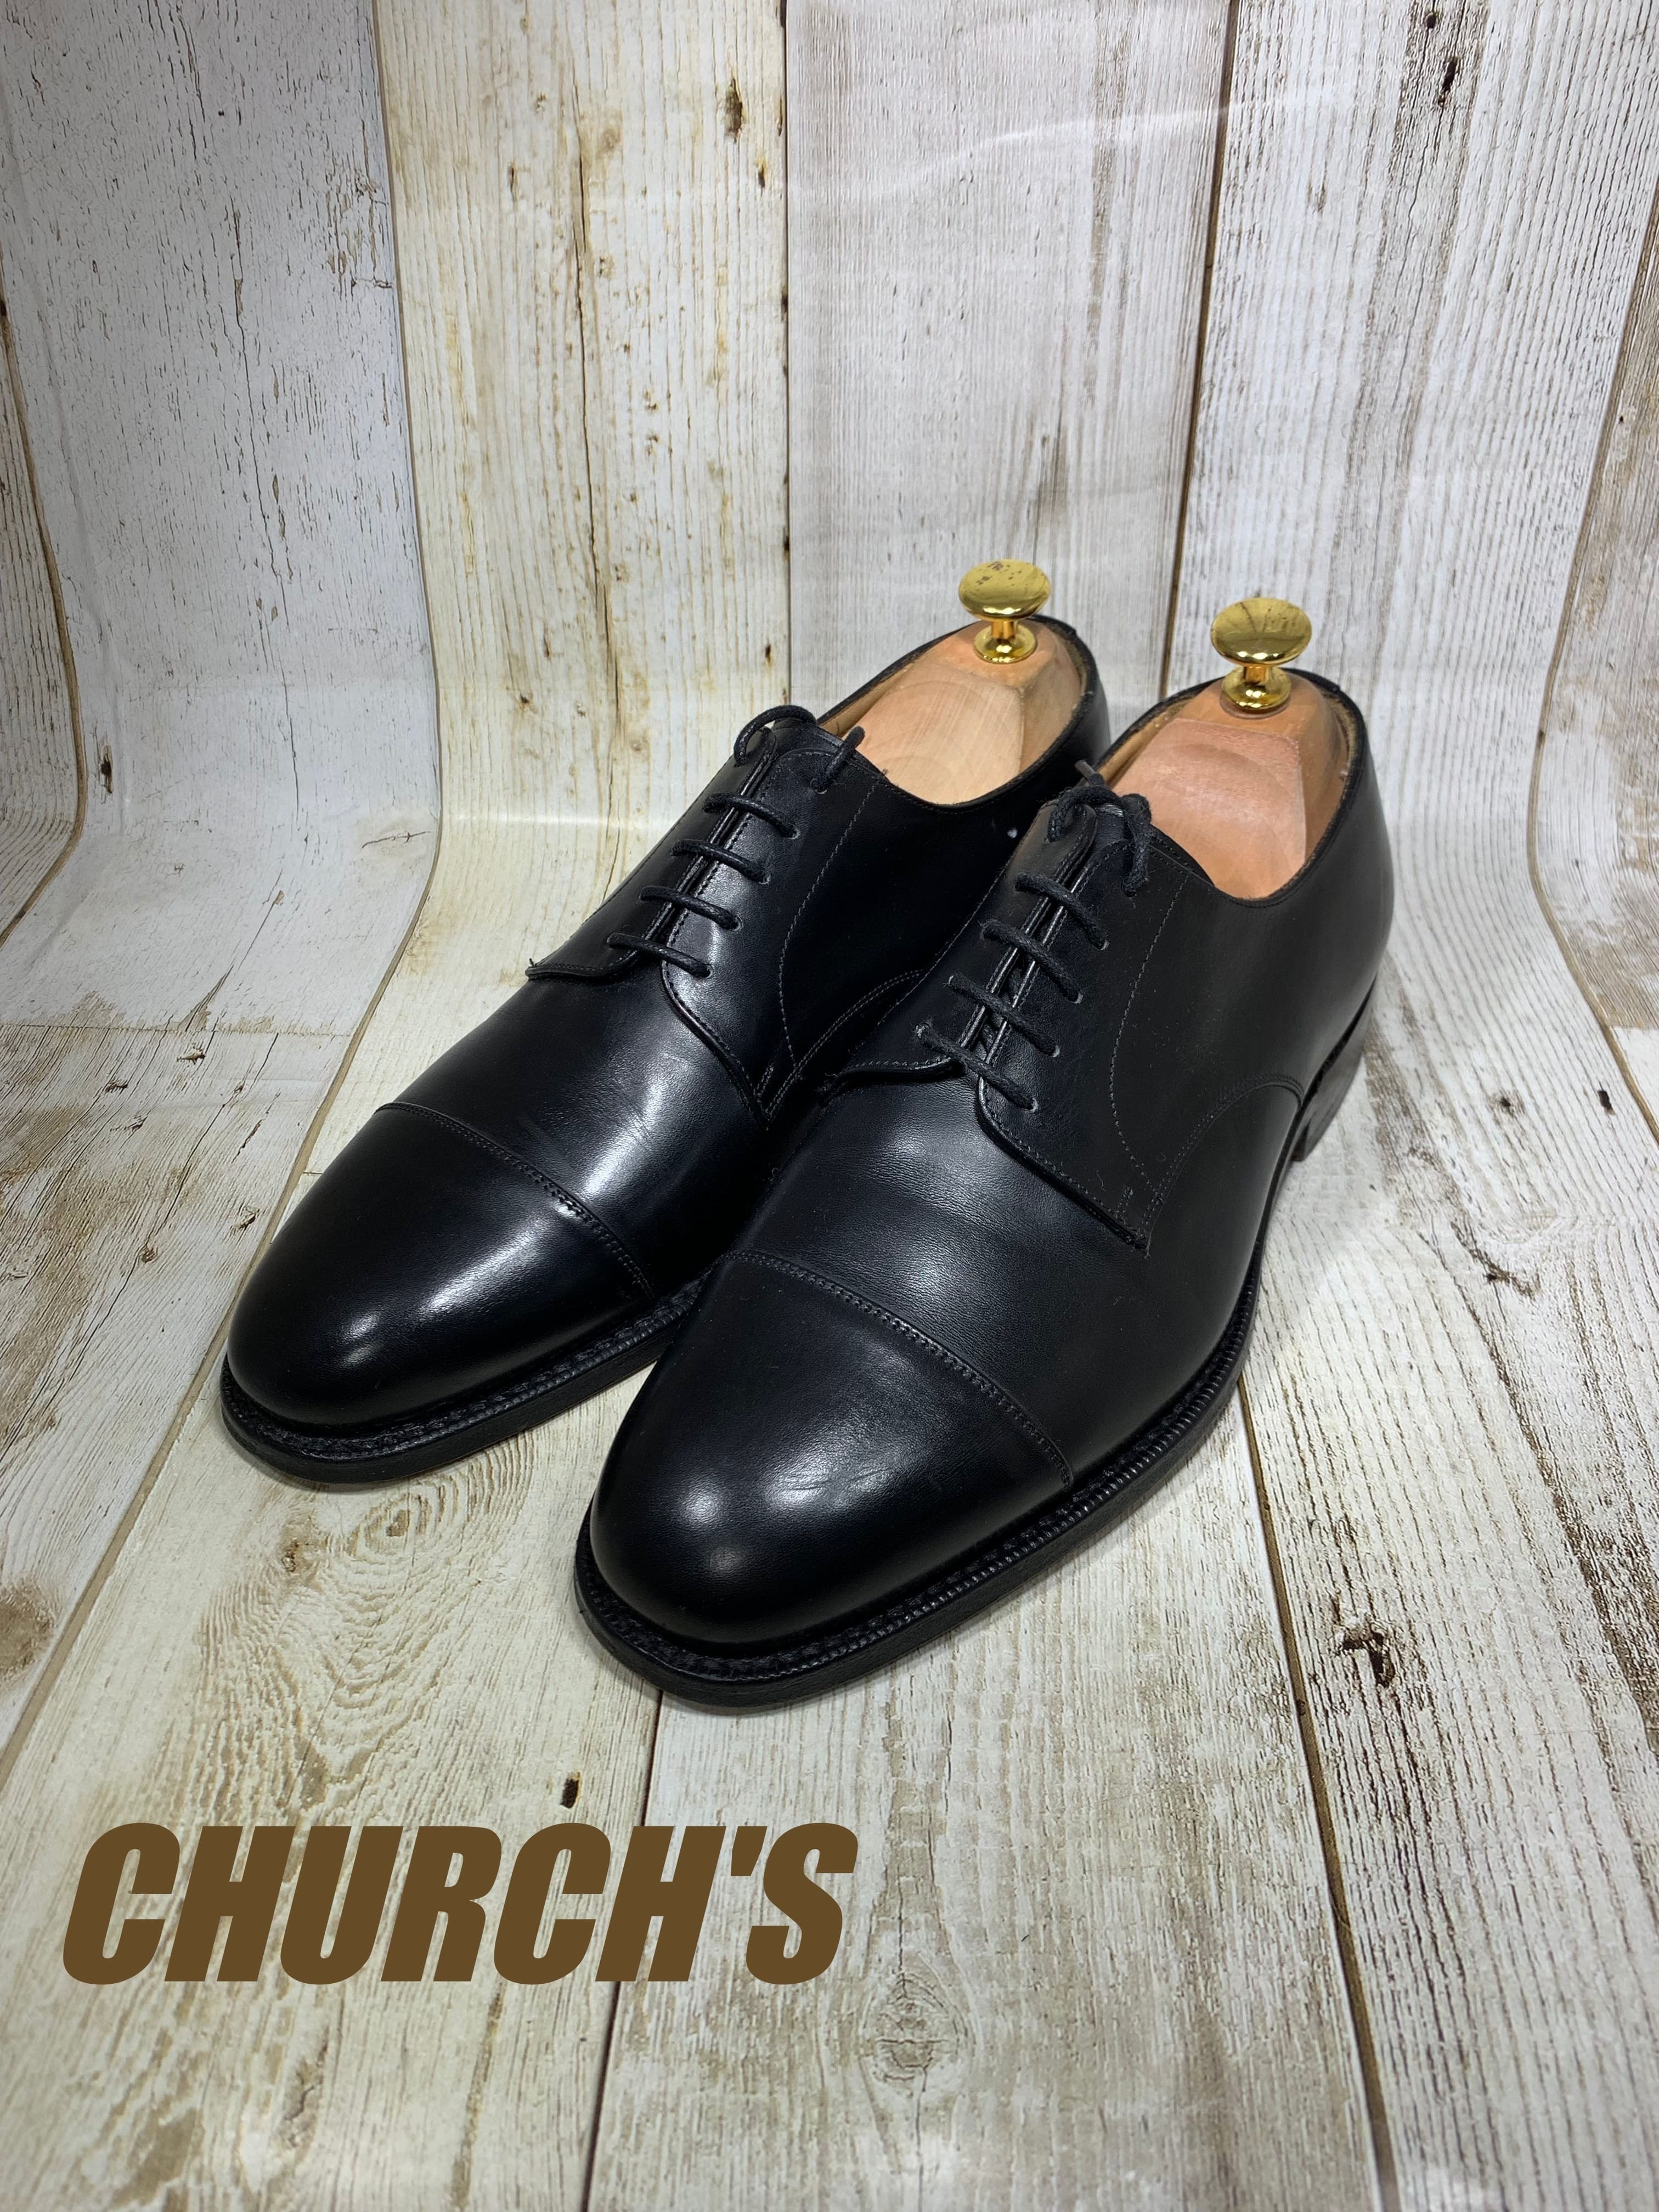 Church's チャーチ ストレートチップ 24.5cm UK6 | 中古靴・革靴